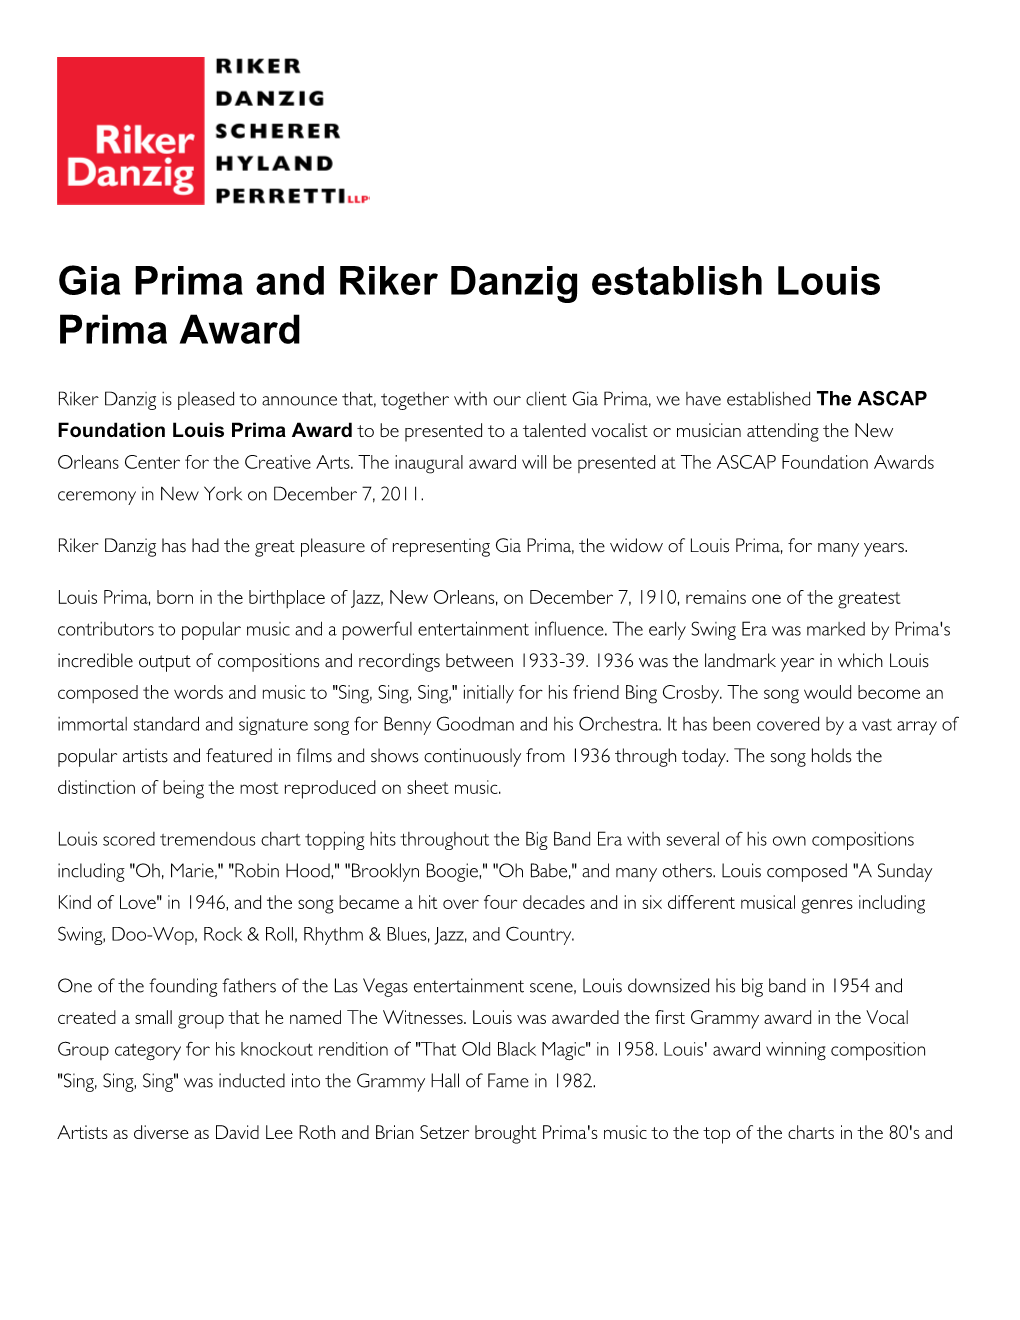 Gia Prima and Riker Danzig Establish Louis Prima Award